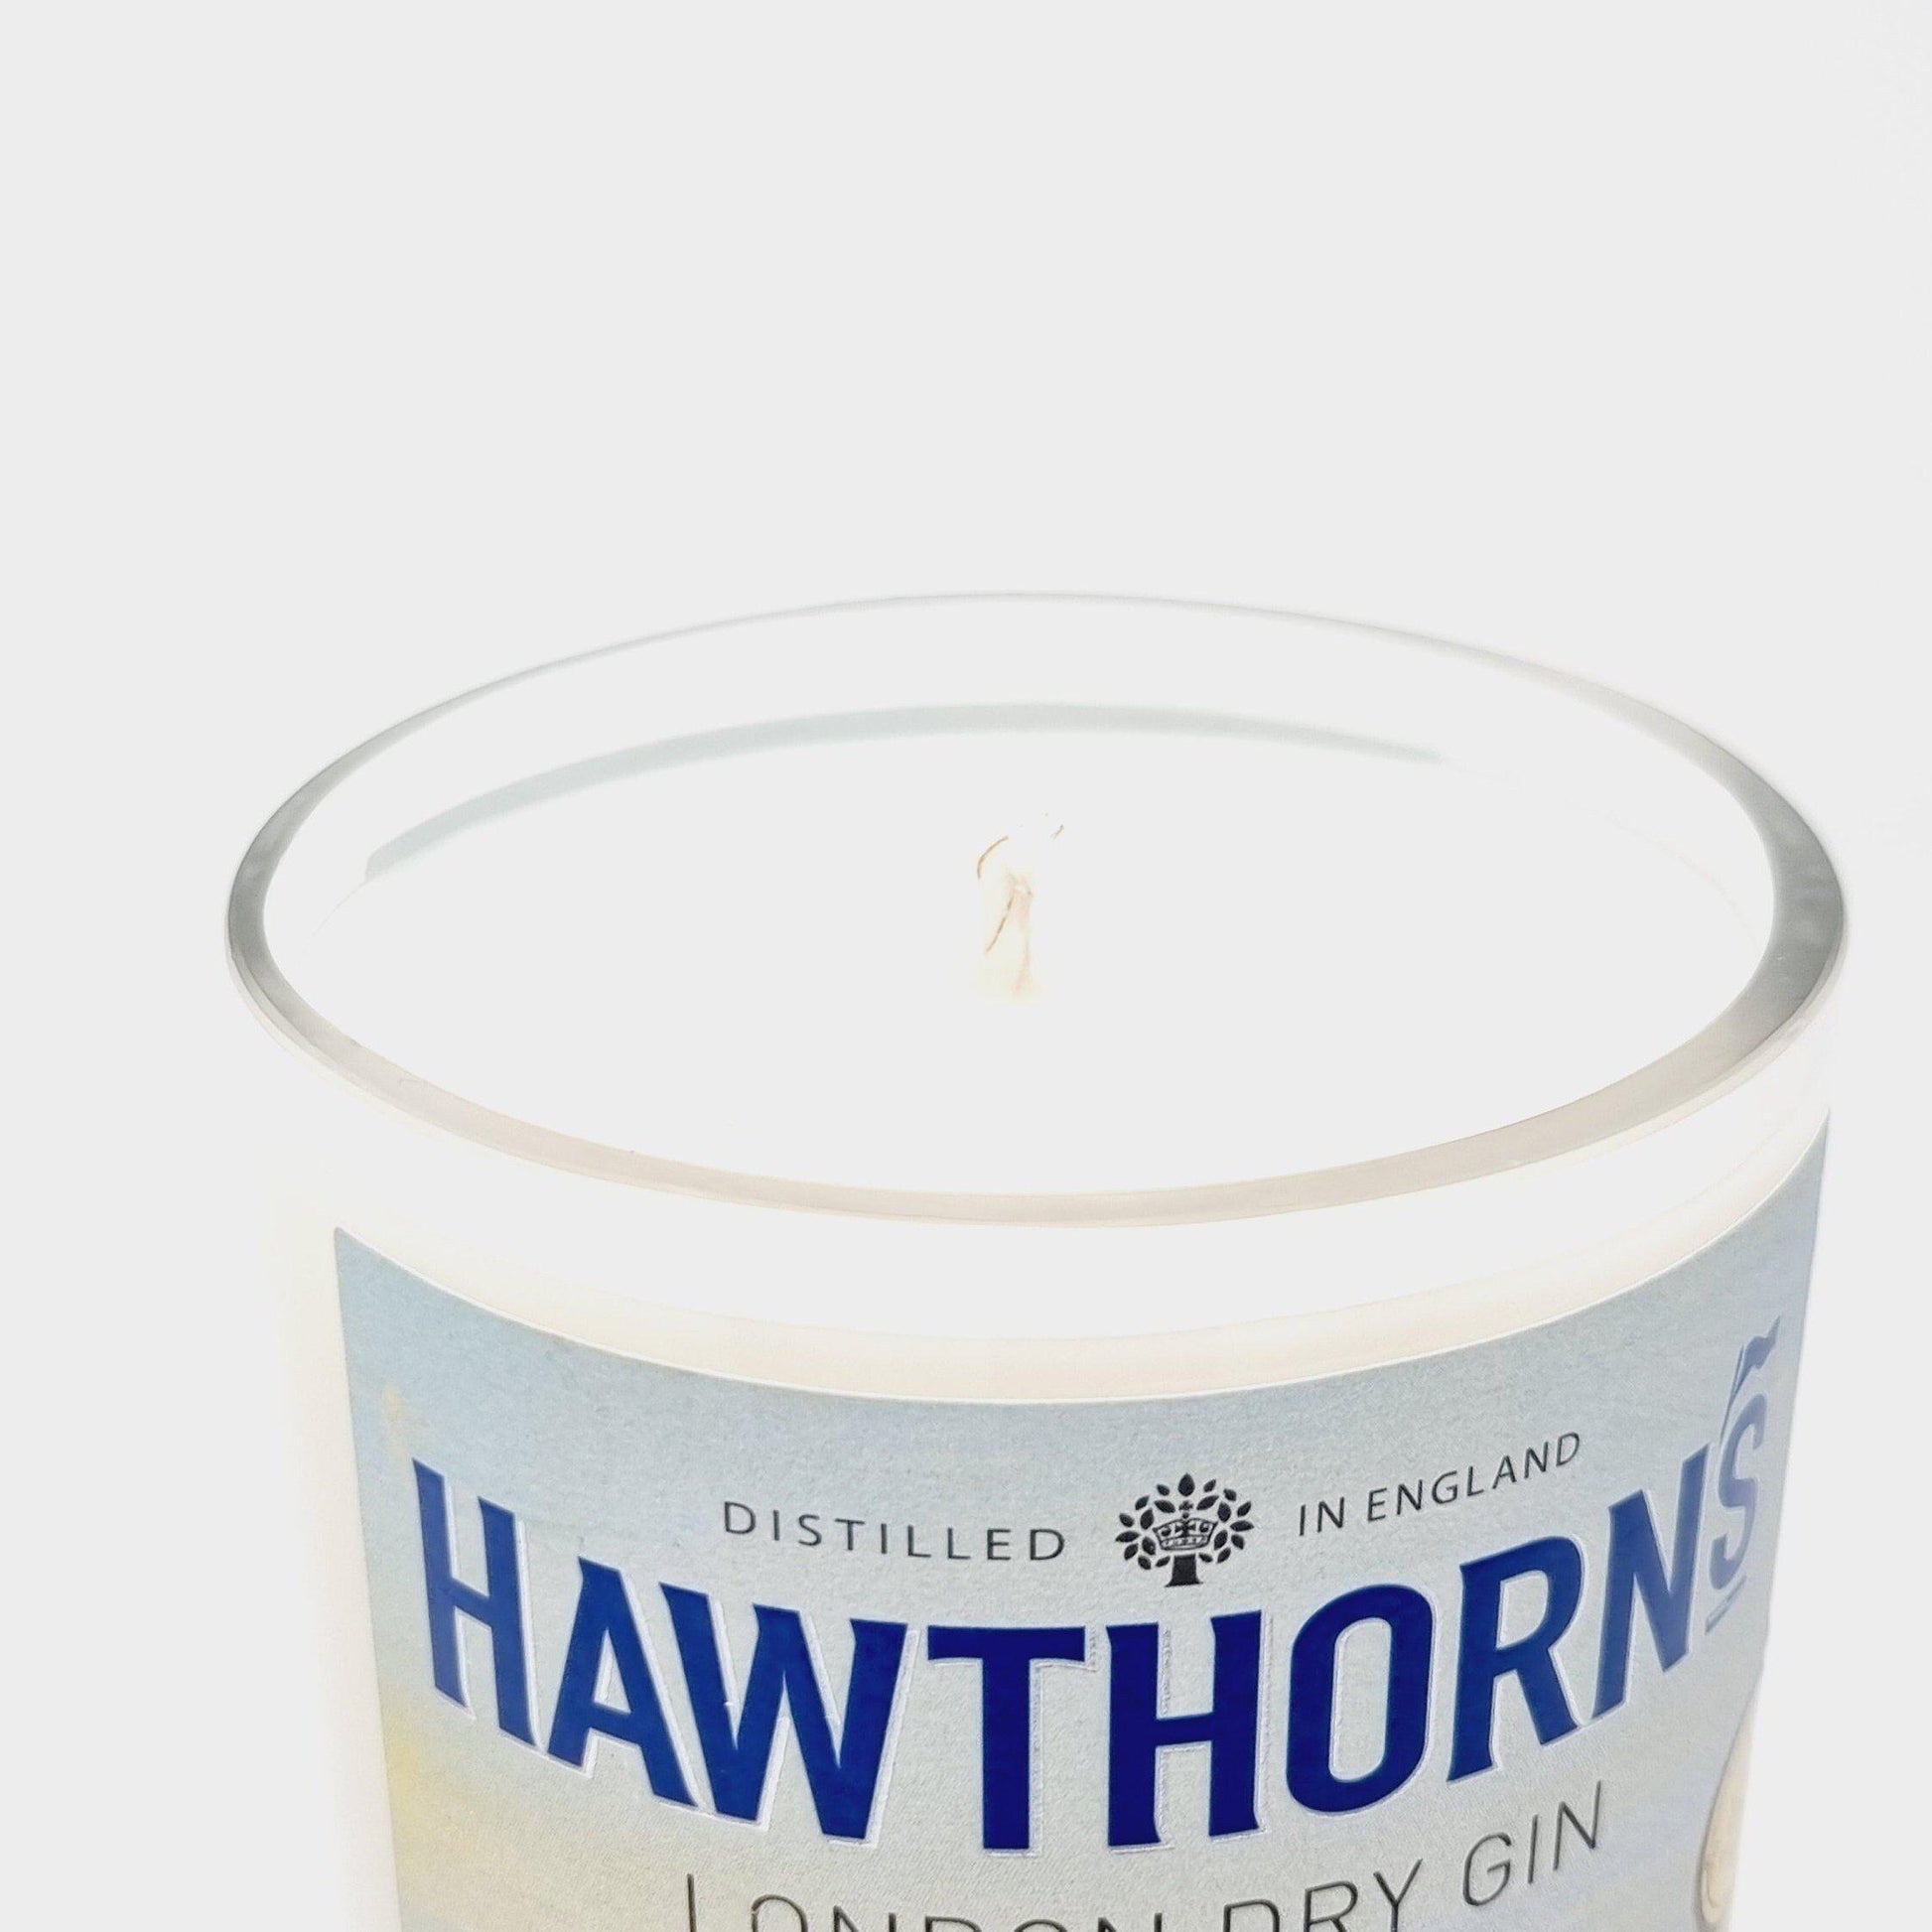 Hawthorns Gin Bottle Candle Adhock Homeware